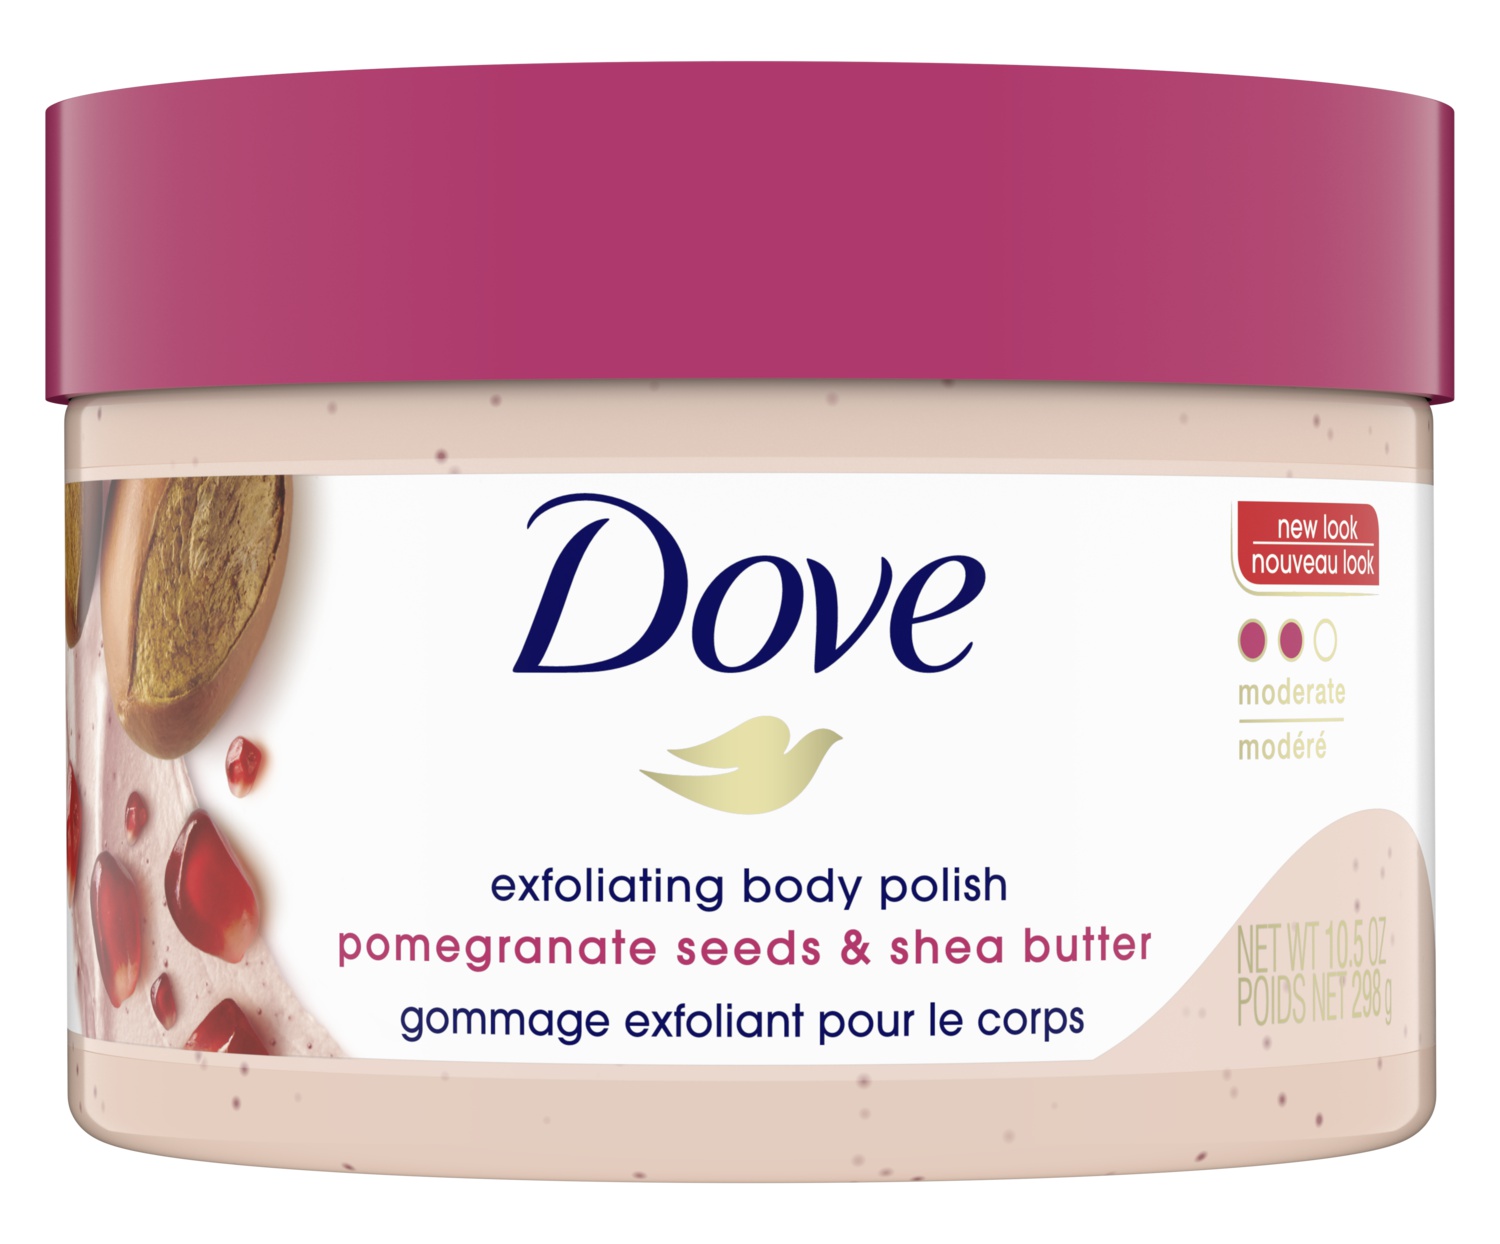 Dove Exfoliating Body Polish Pomegranate Seeds & Shea Butter